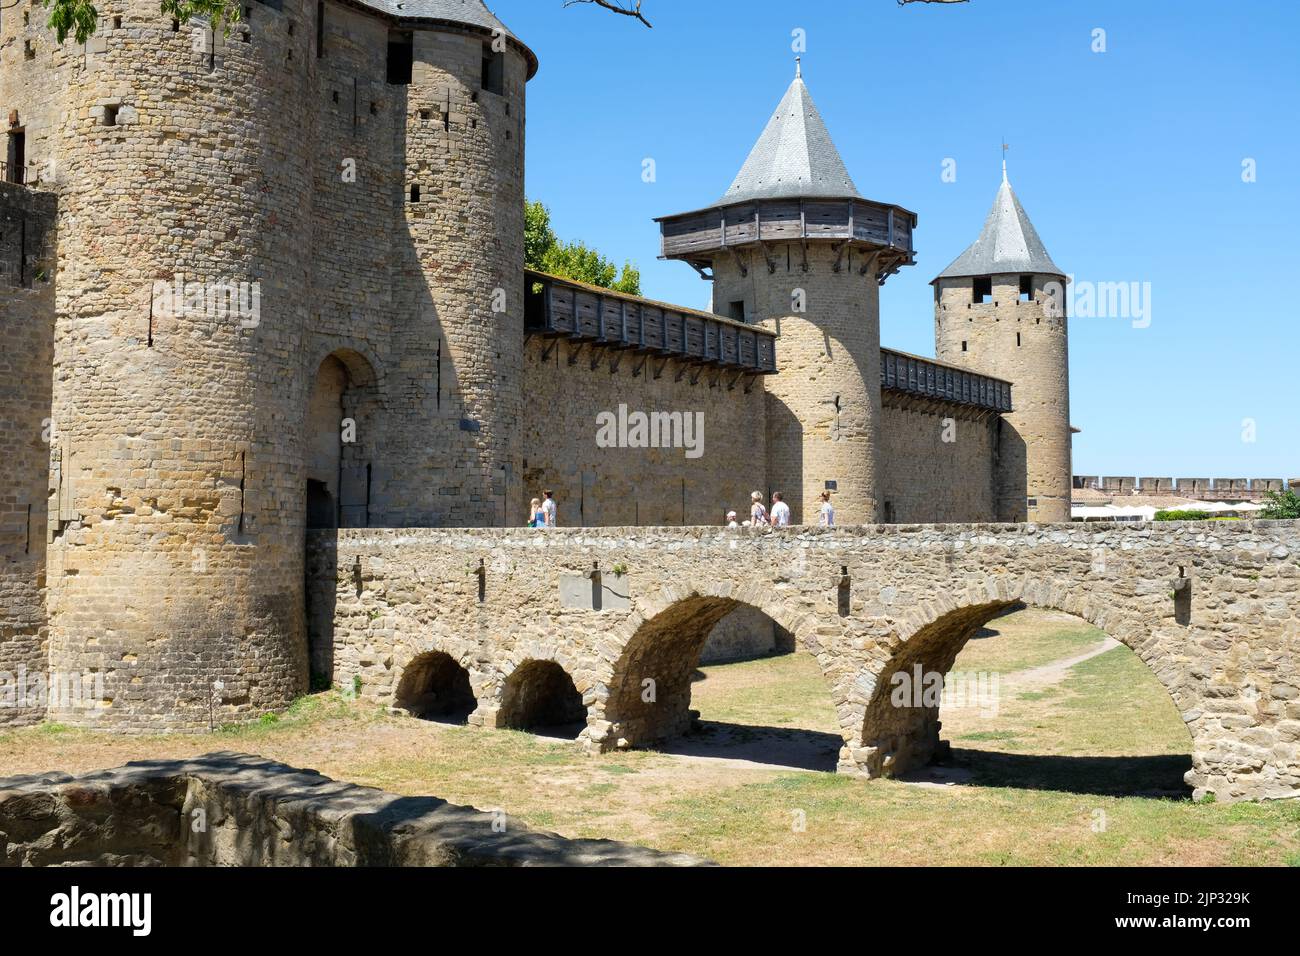 La Citie. Medieval Castle in Carcassonne France. Stock Photo